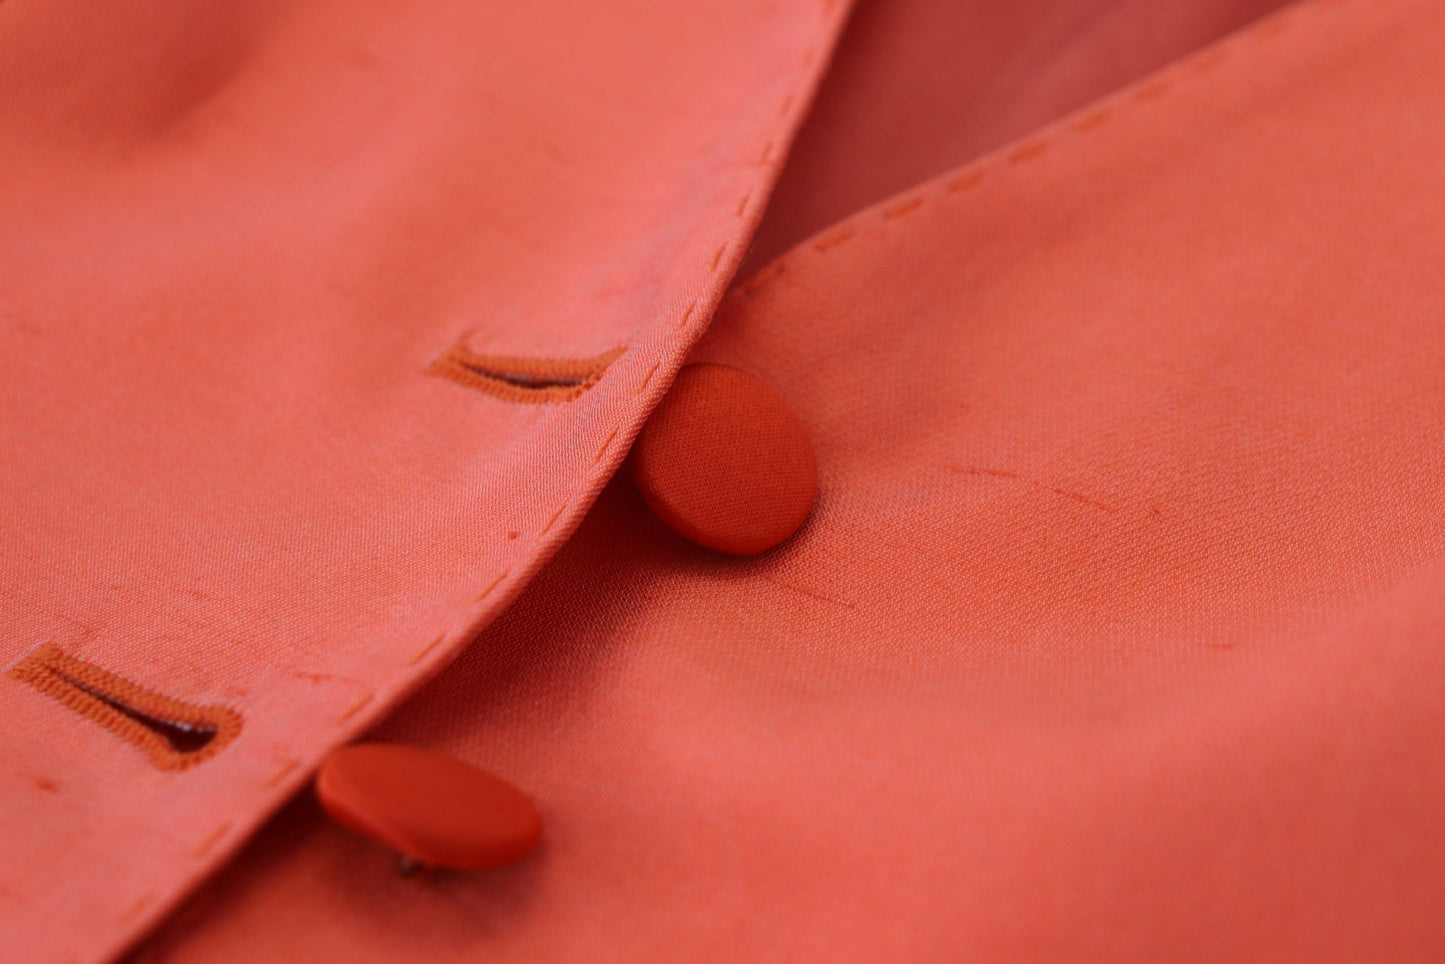 Dolce & Gabbana Orange Sleeveless Waistcoat Cropped Vest Top